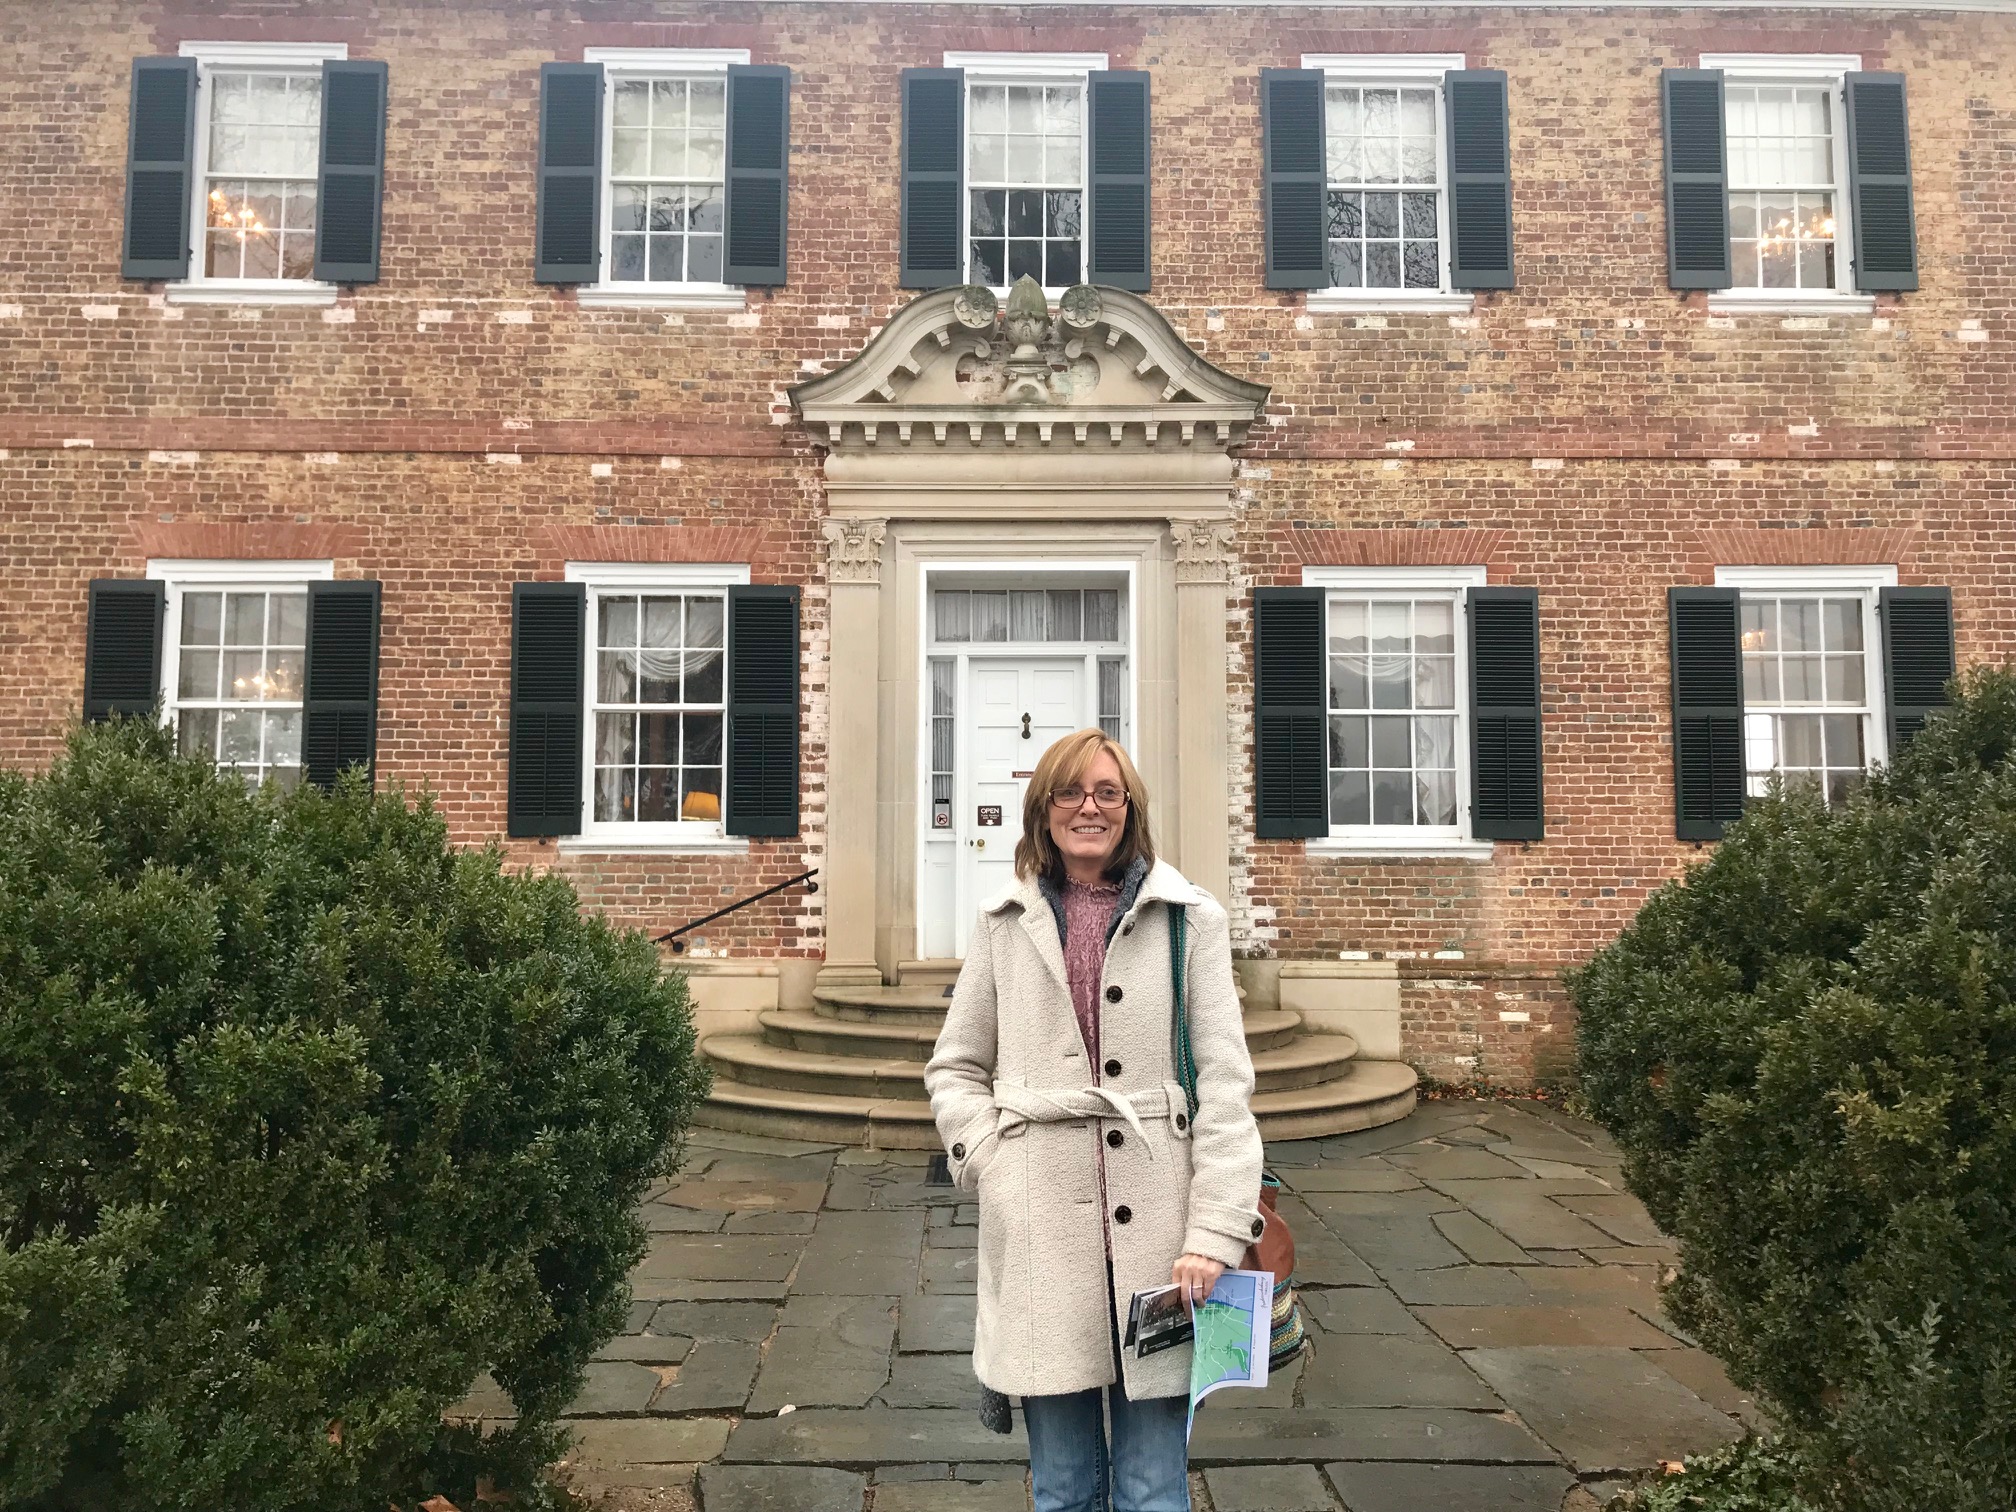 Fredericksburg Virginia’s Chatham Manor